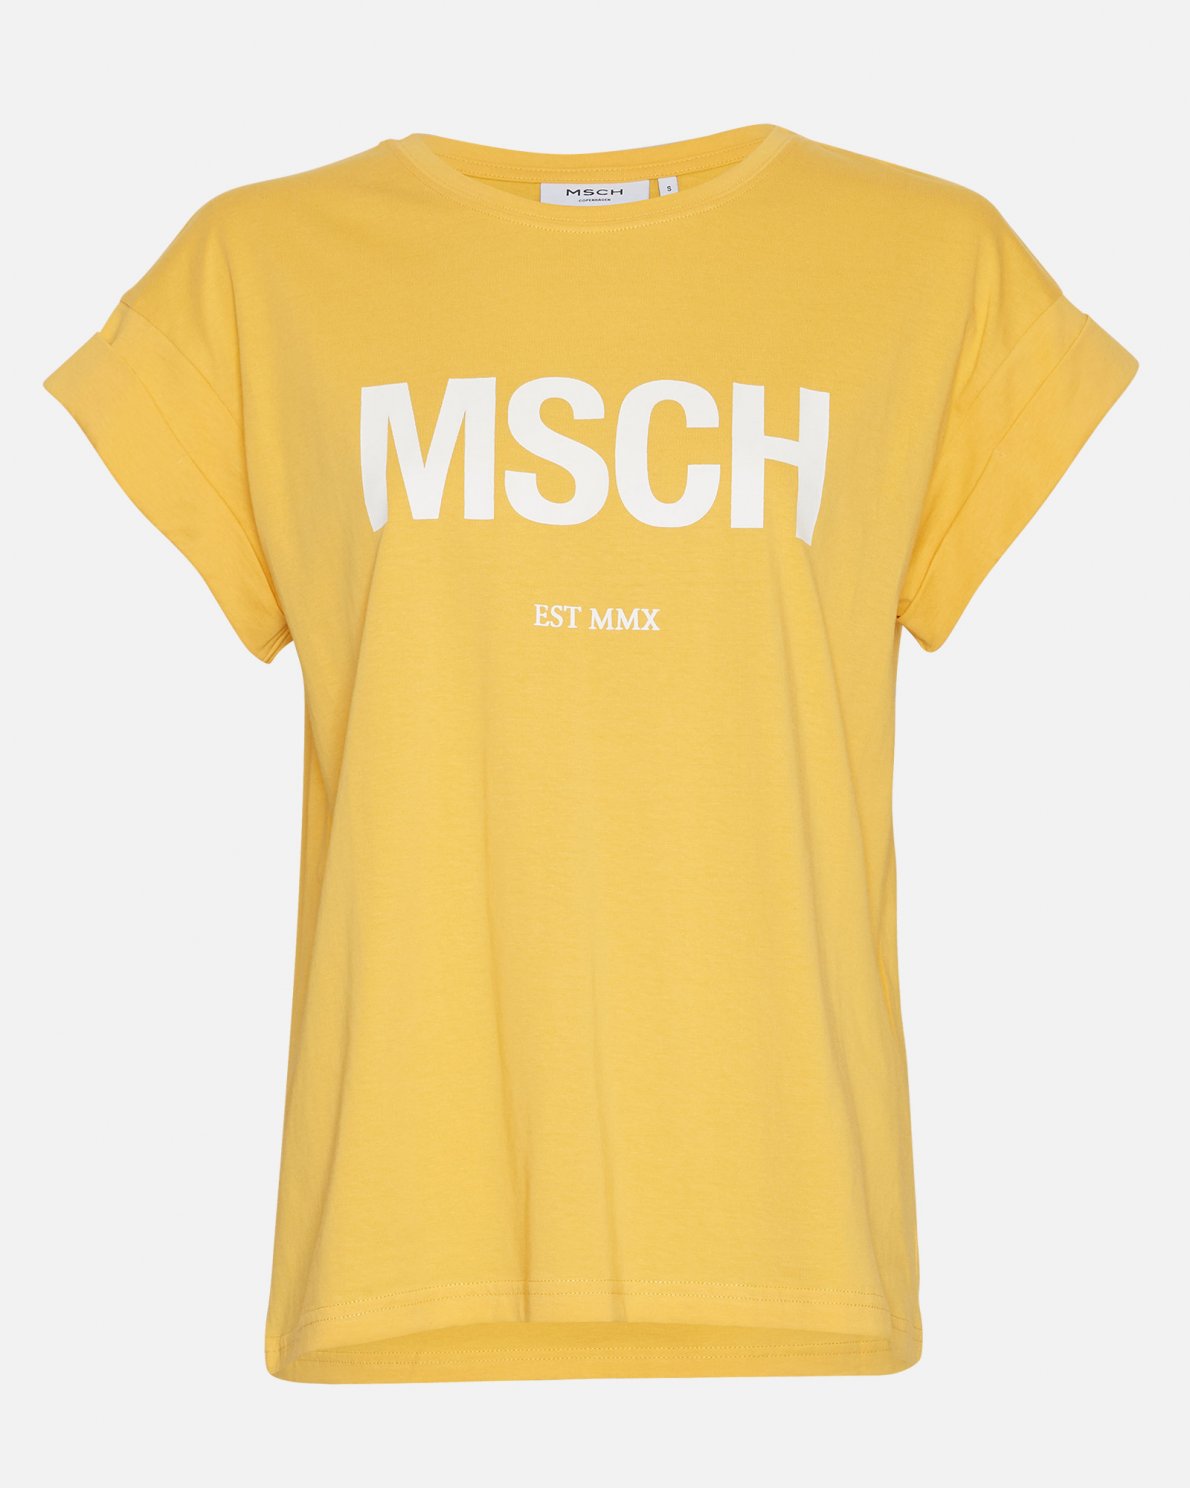 vergeten Manieren via alva organic t-shirt msch geel